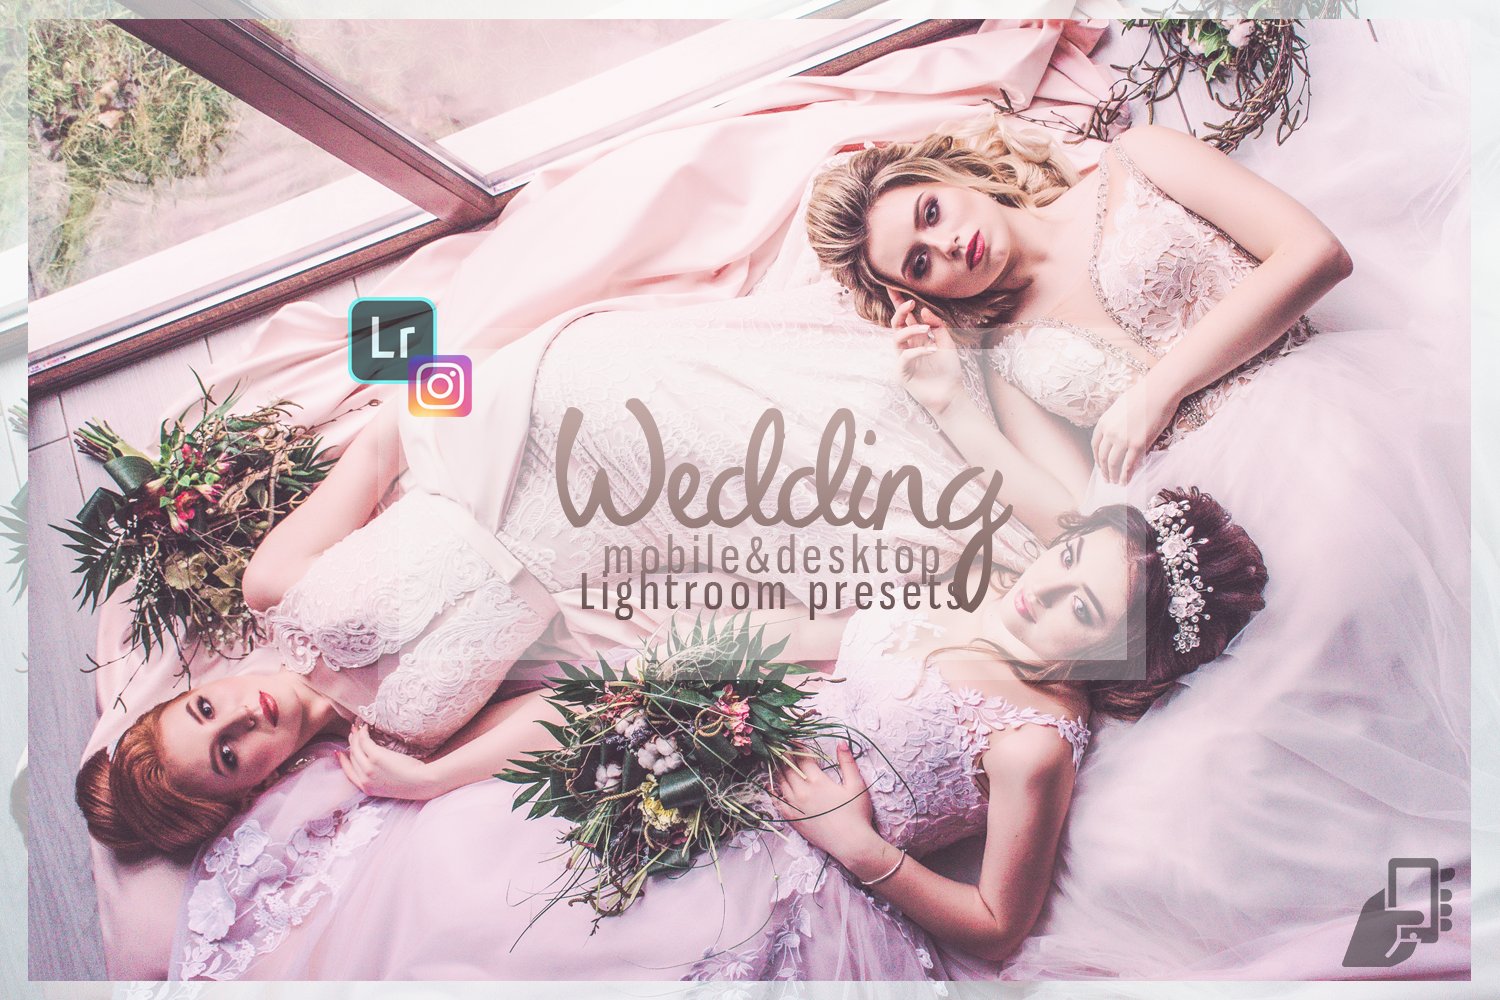 Wedding Lightroom presetscover image.